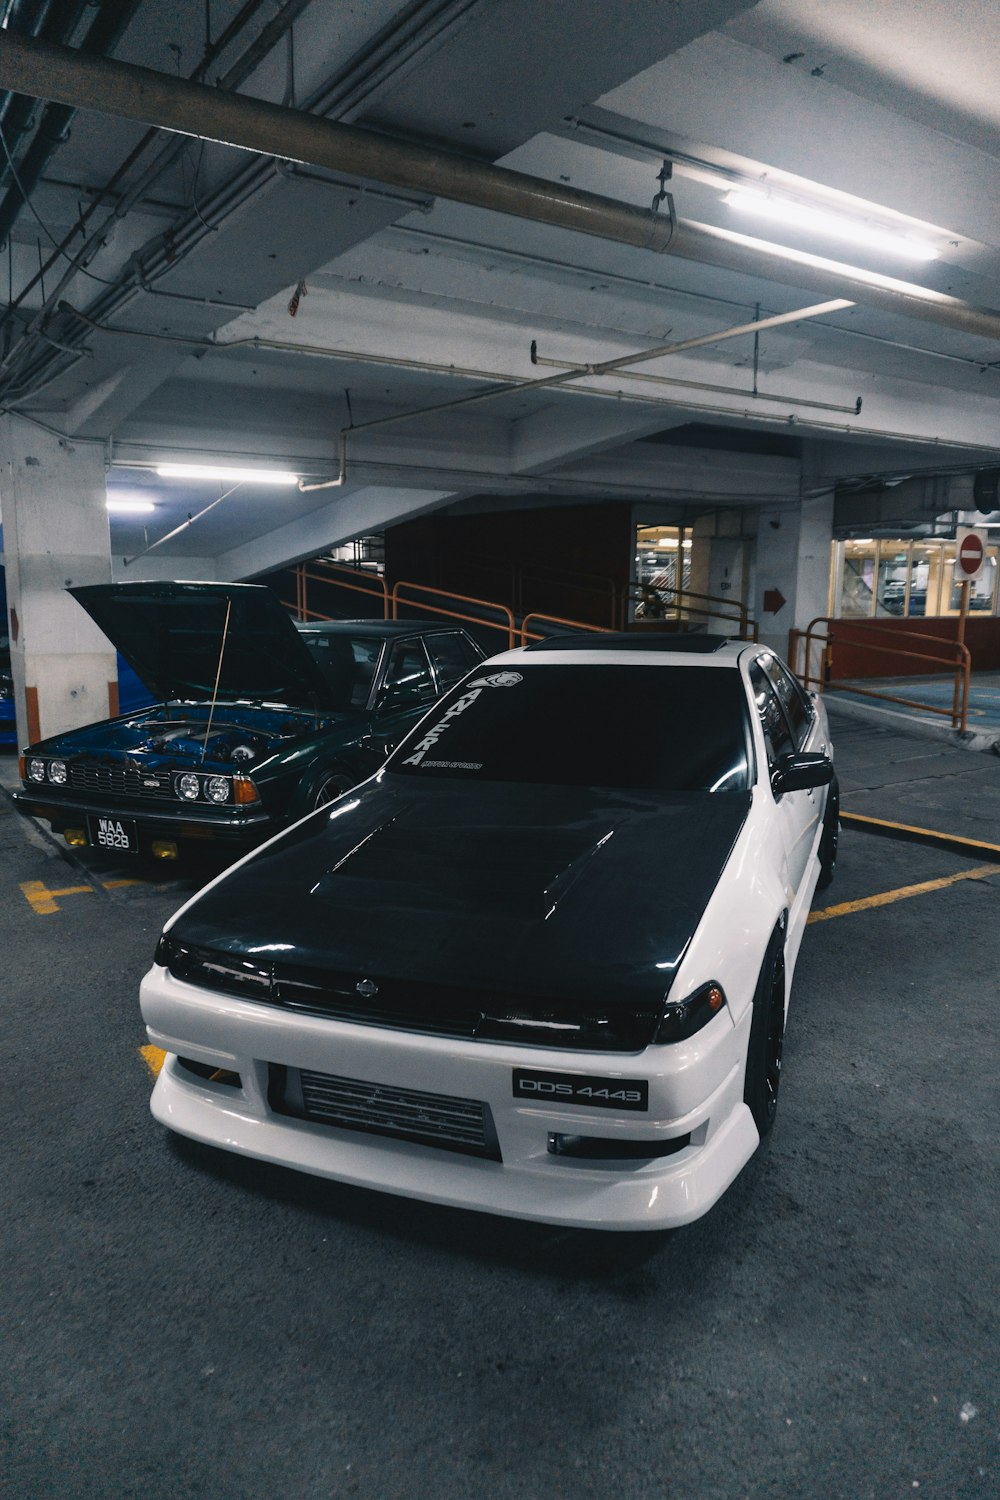 a white car parked in a parking garage